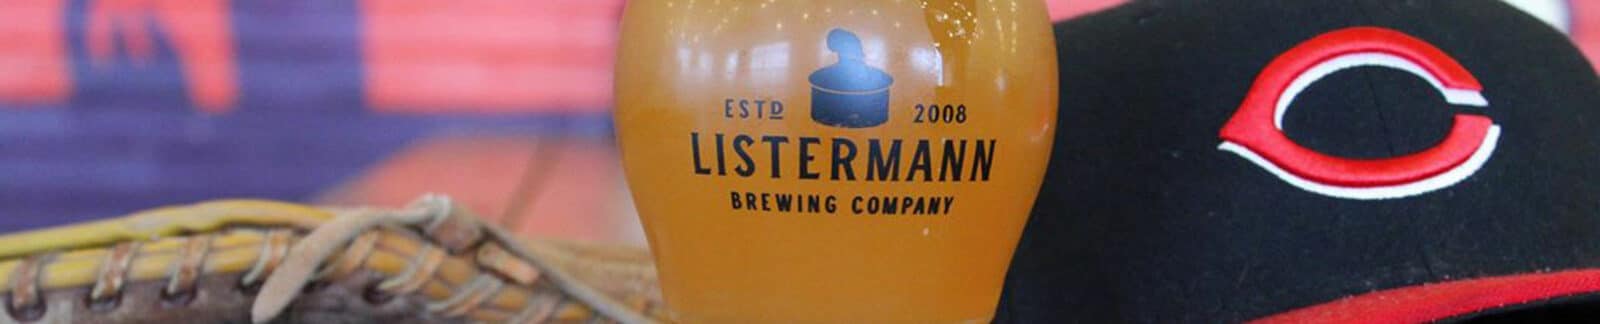 Listermann Brewing header